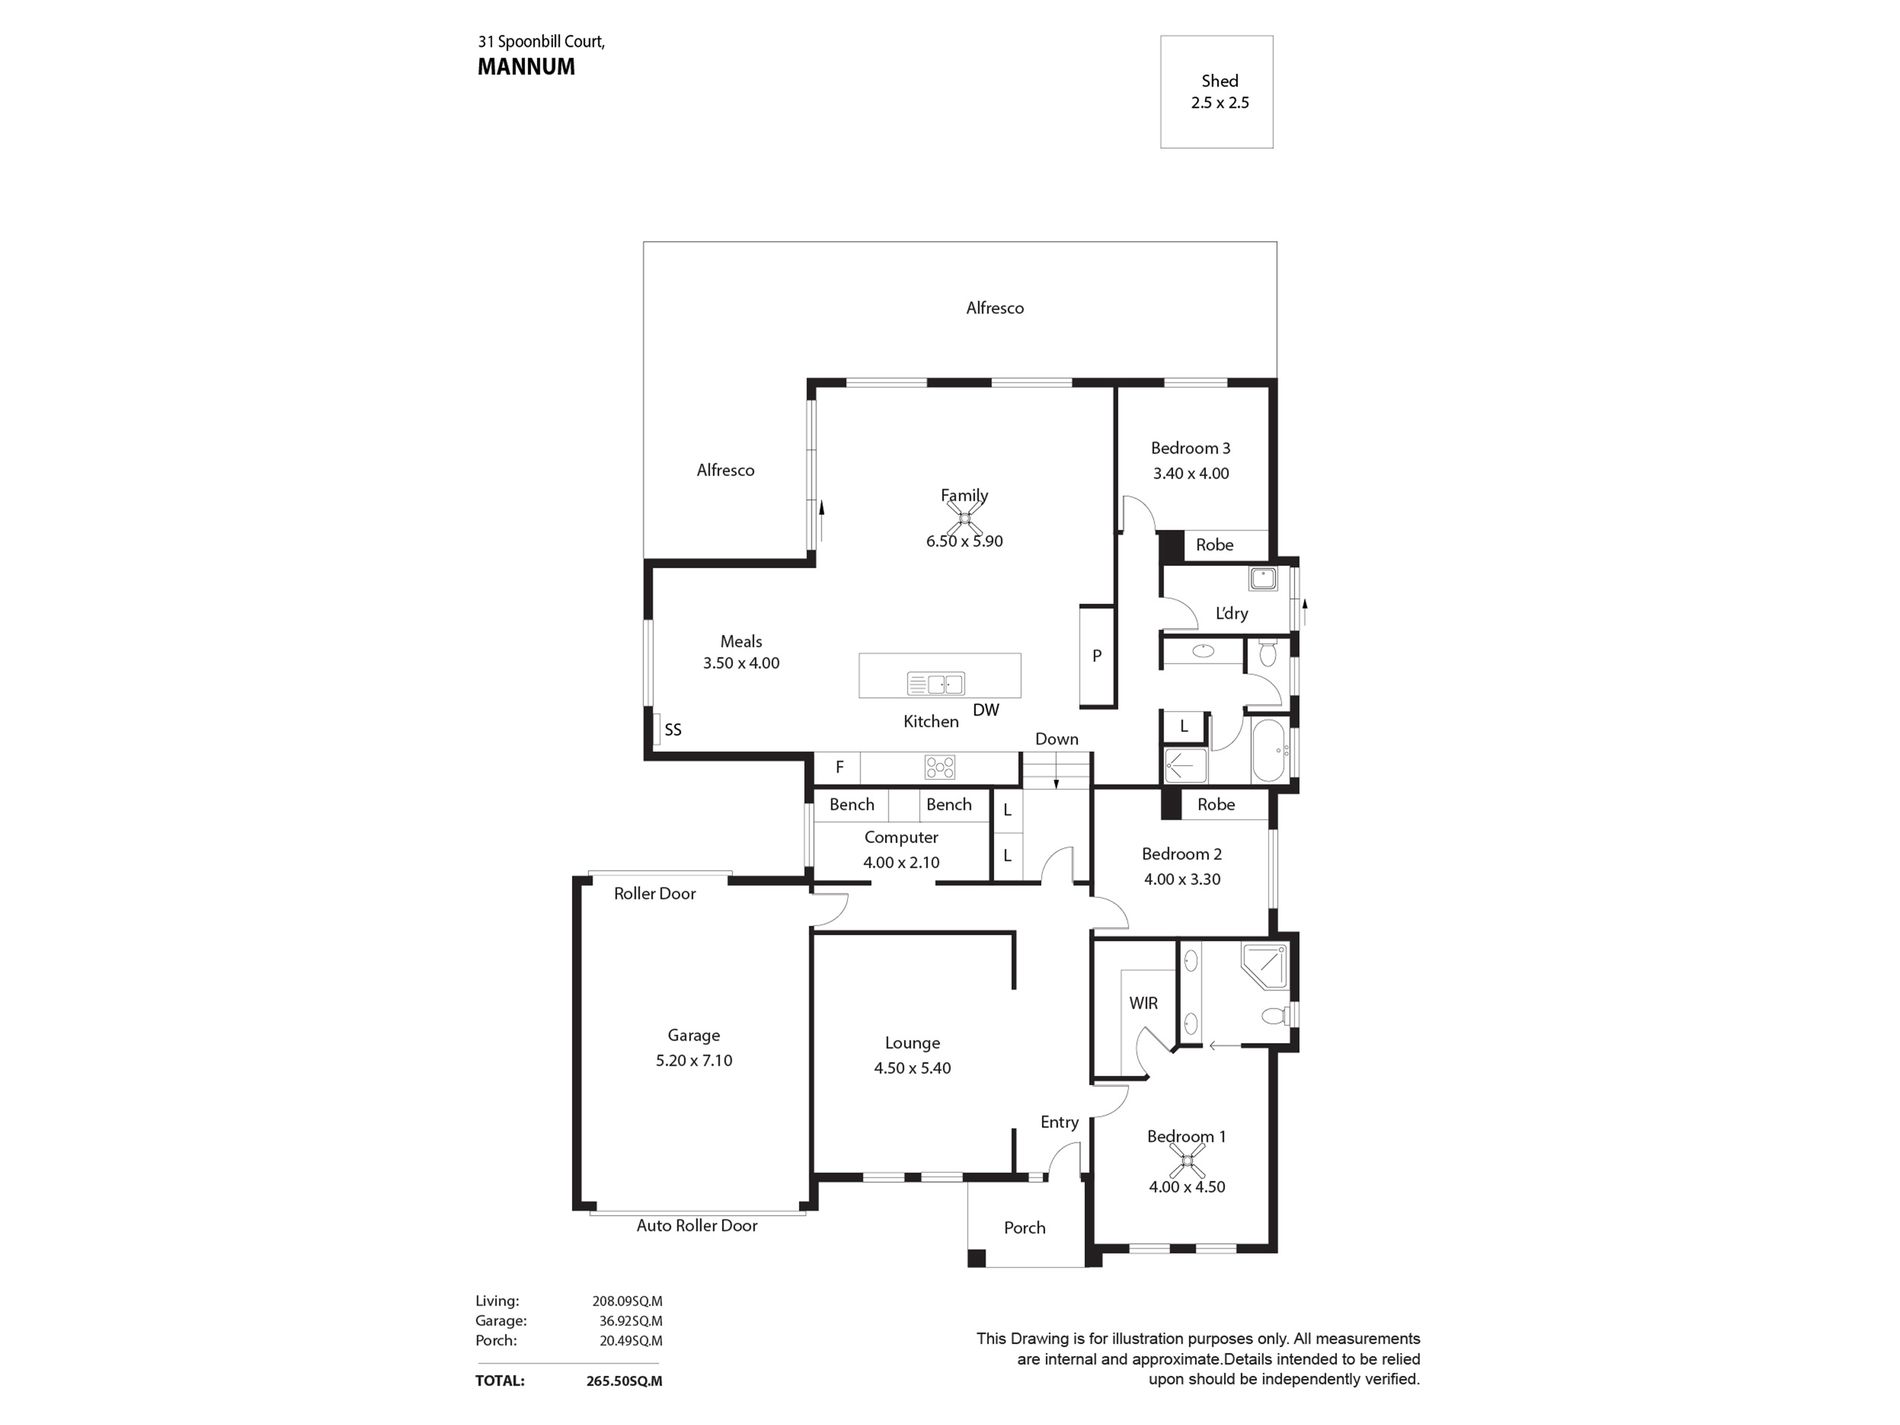 31 Spoonbill Court, Mannum Floor Plan